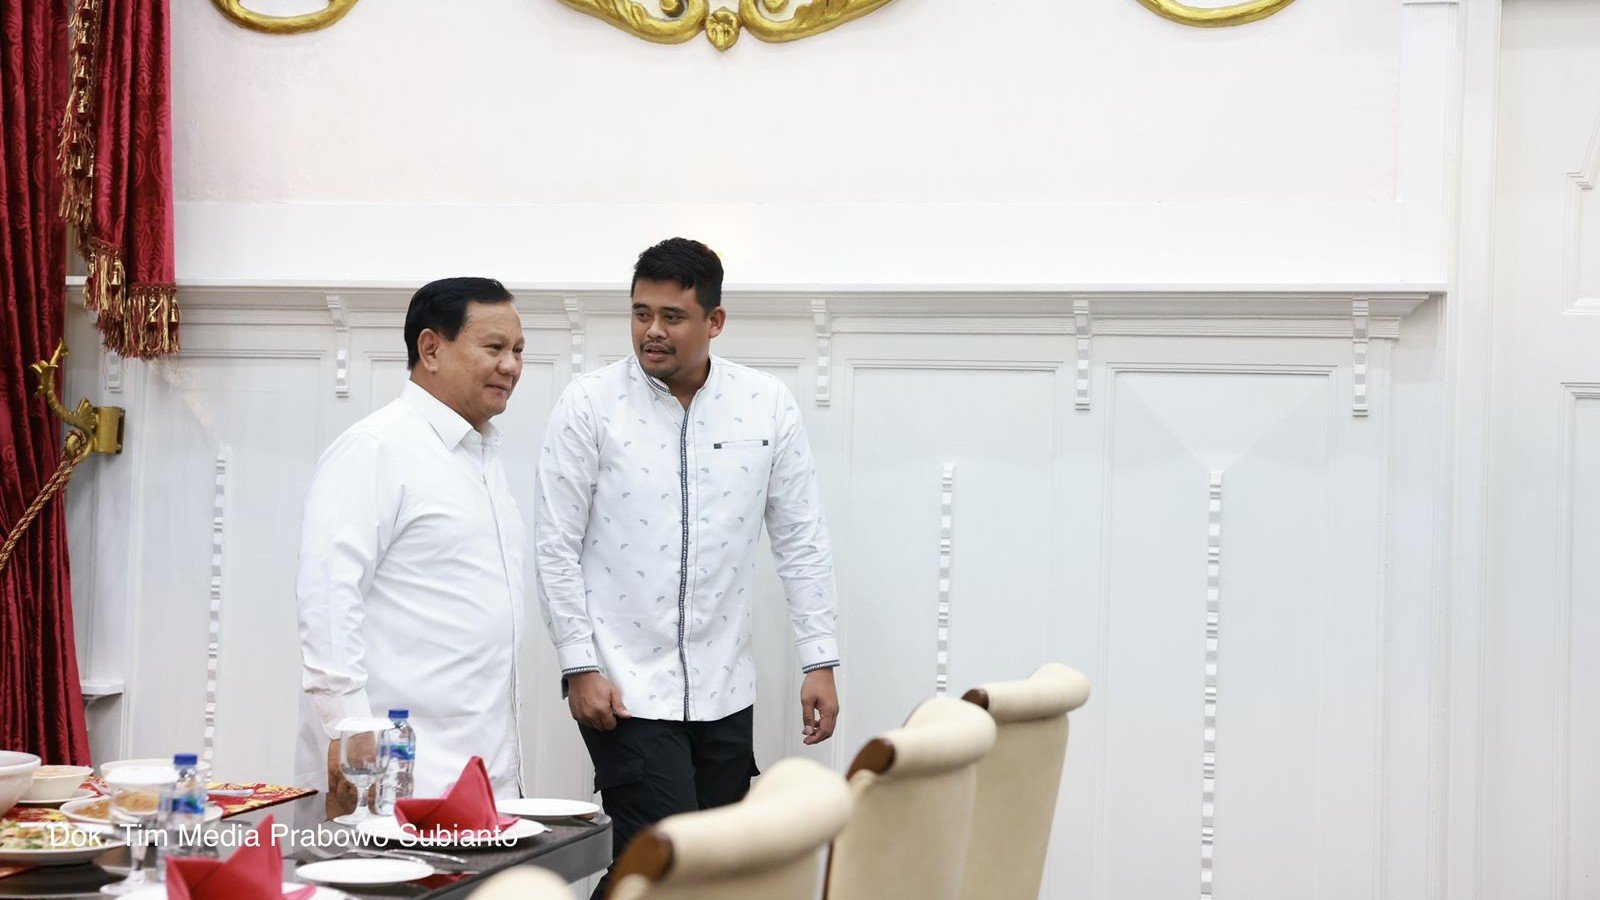 Pertemuan antara Prabowo Subianto dengan Bobby Nasution/ Tim Media Prabowo